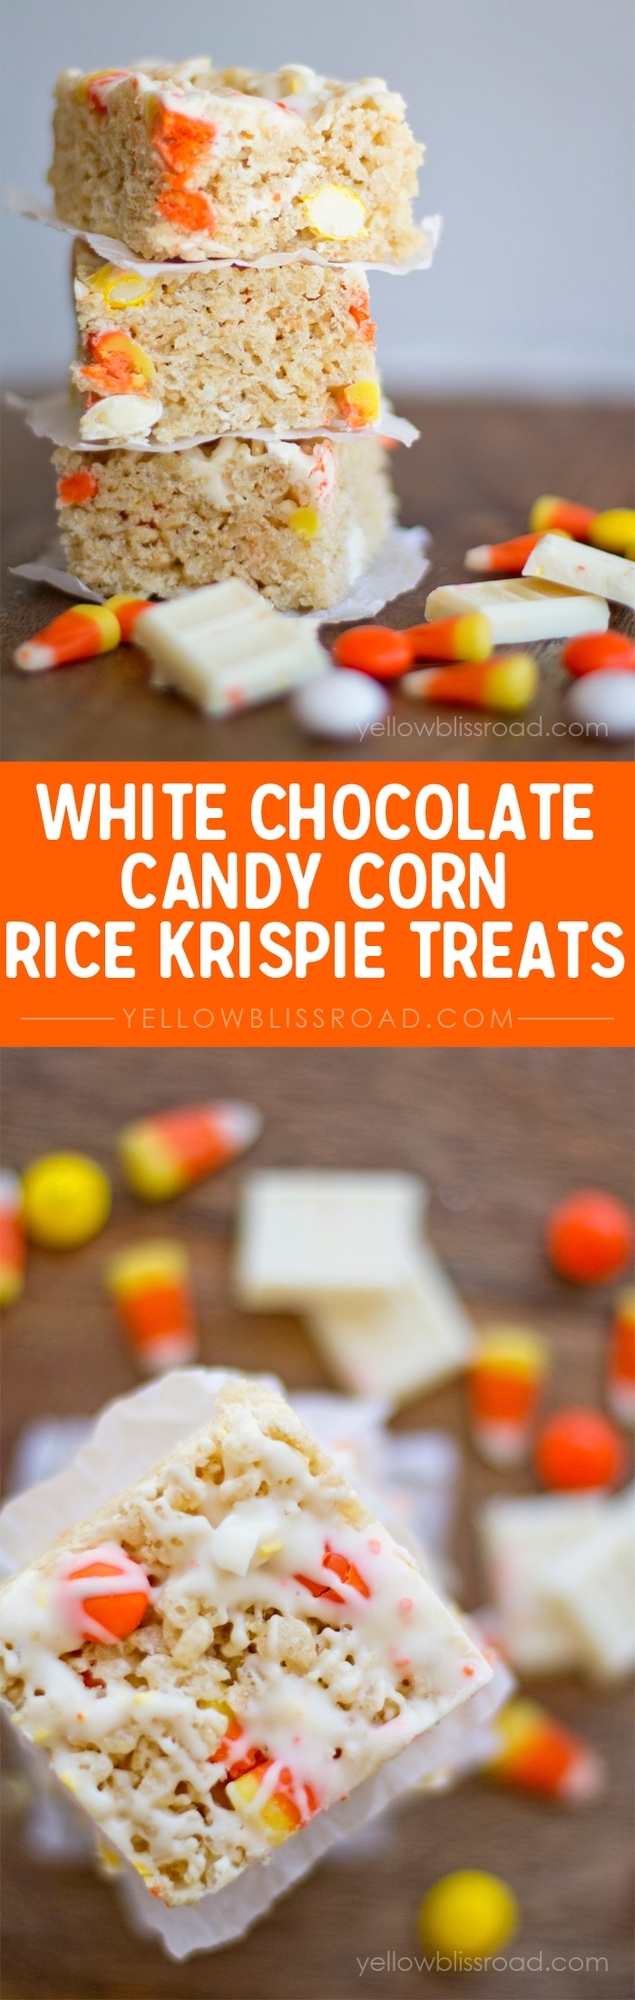 White Chocolate & Candy Corn Rice Krispie Treats - Perfect Fall or Halloween Treat!